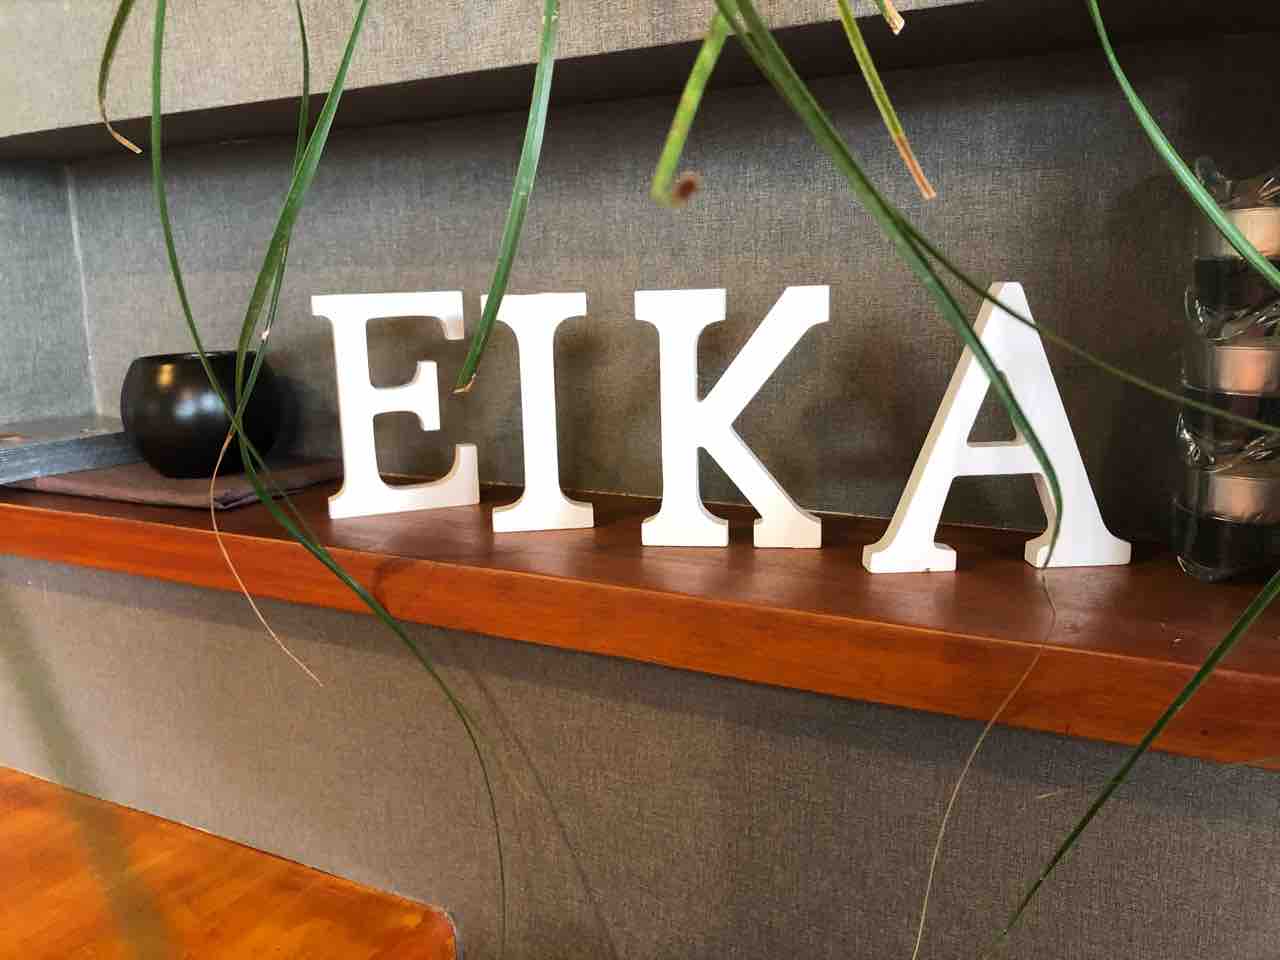 『栄夏 EIKA Cafe & Restaurant』